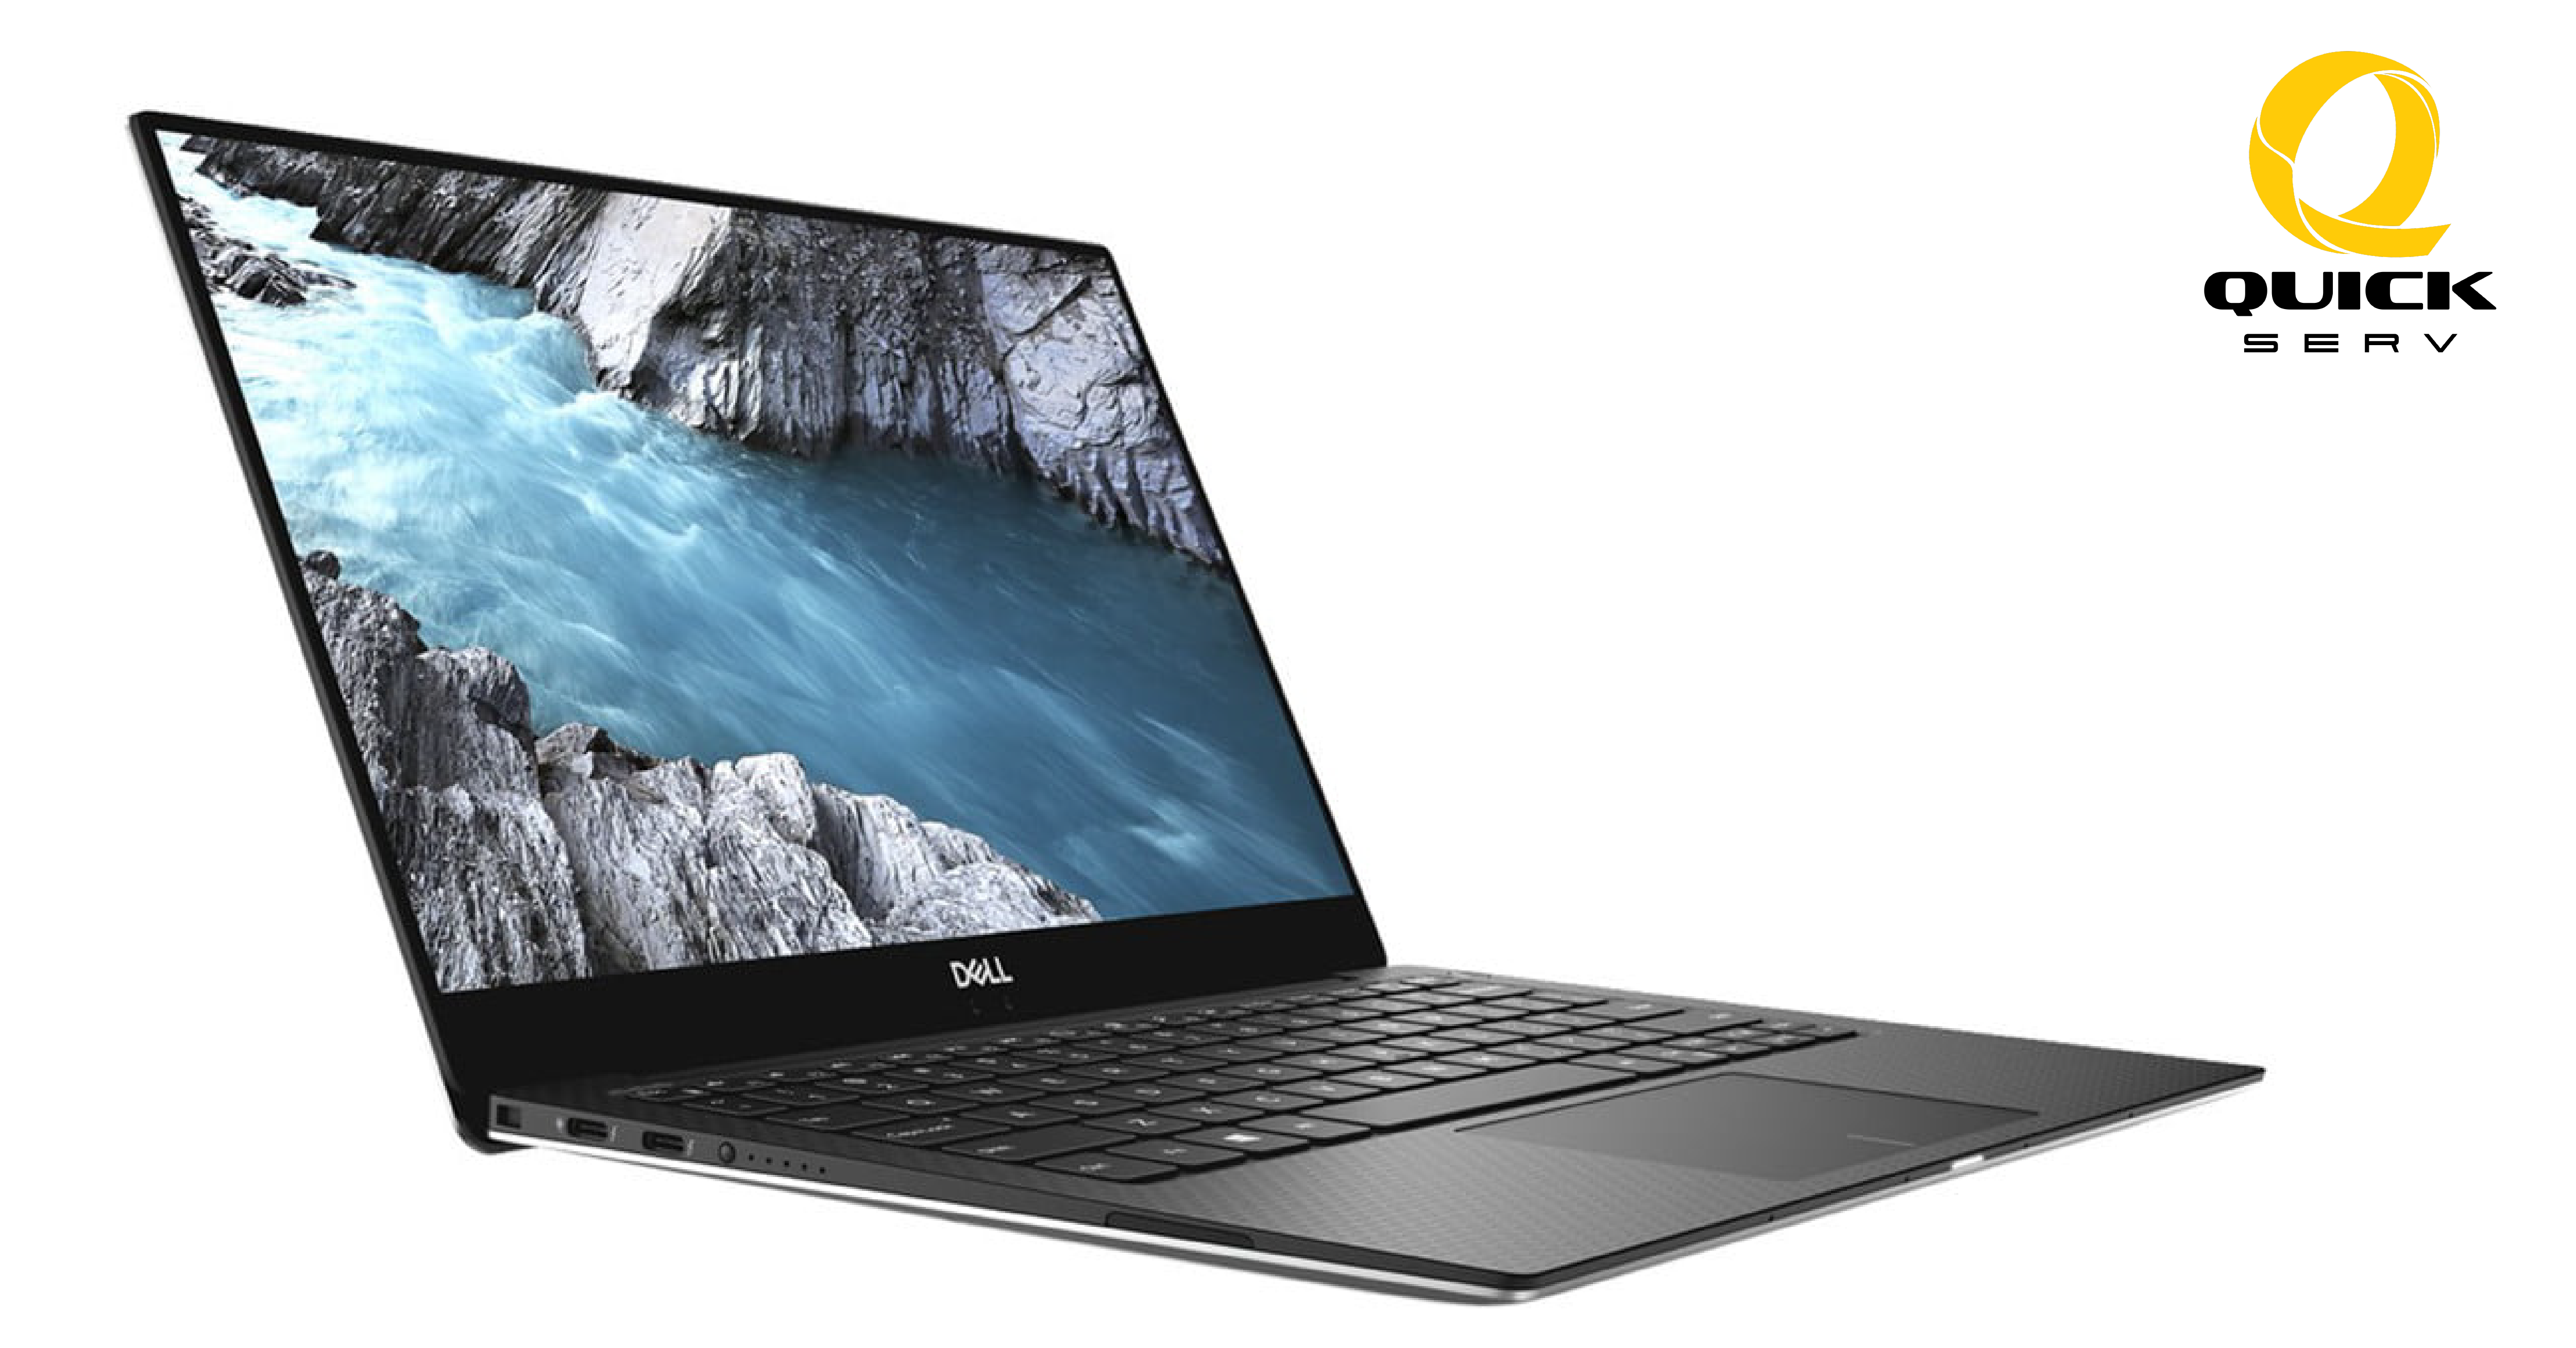 Dell XPS 13 (2018): Ultrabook